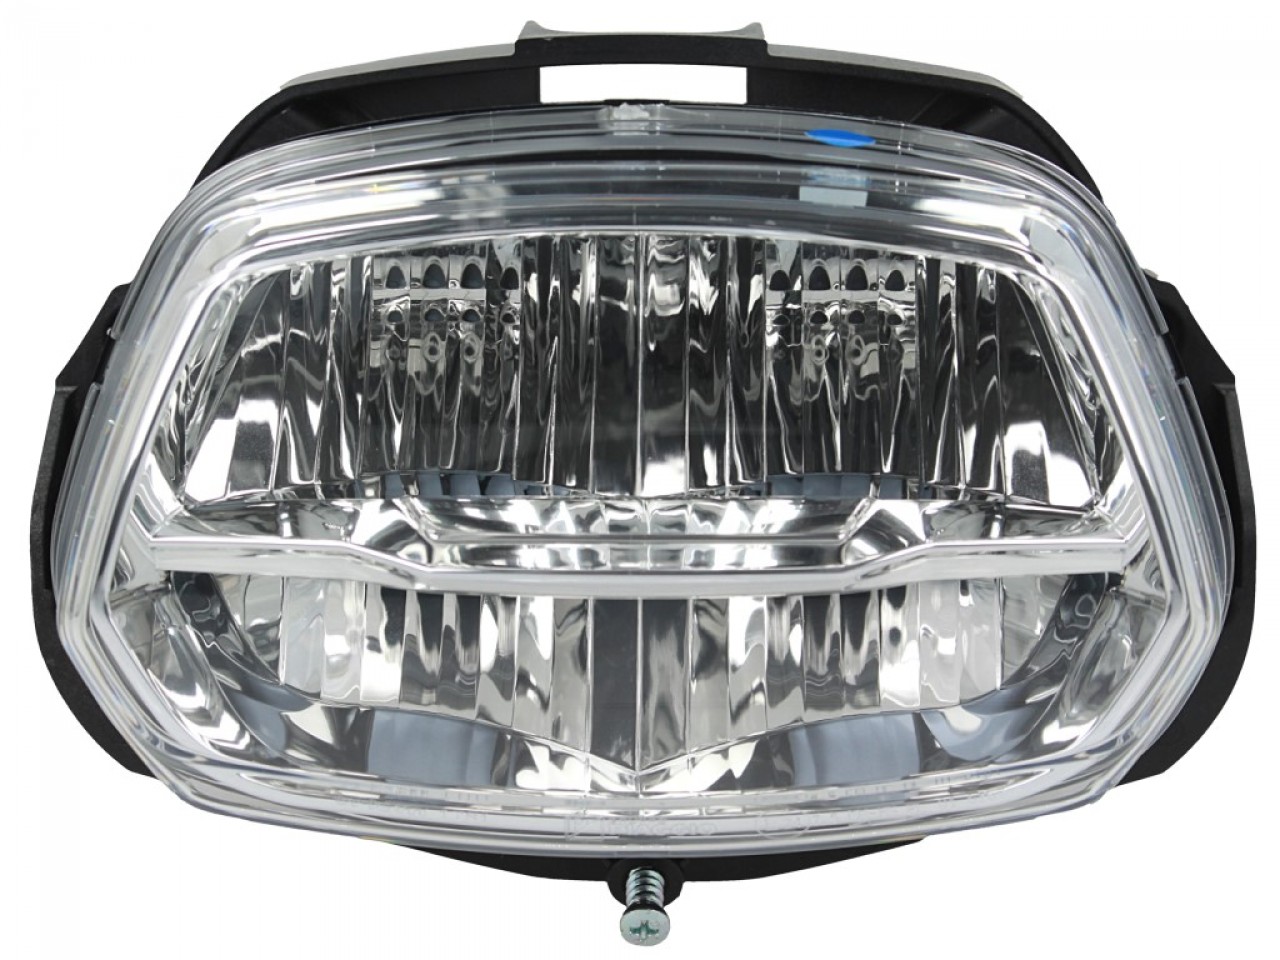 vespa lx 50 front headlight lampe head lamp scheinwerfer licht rm2